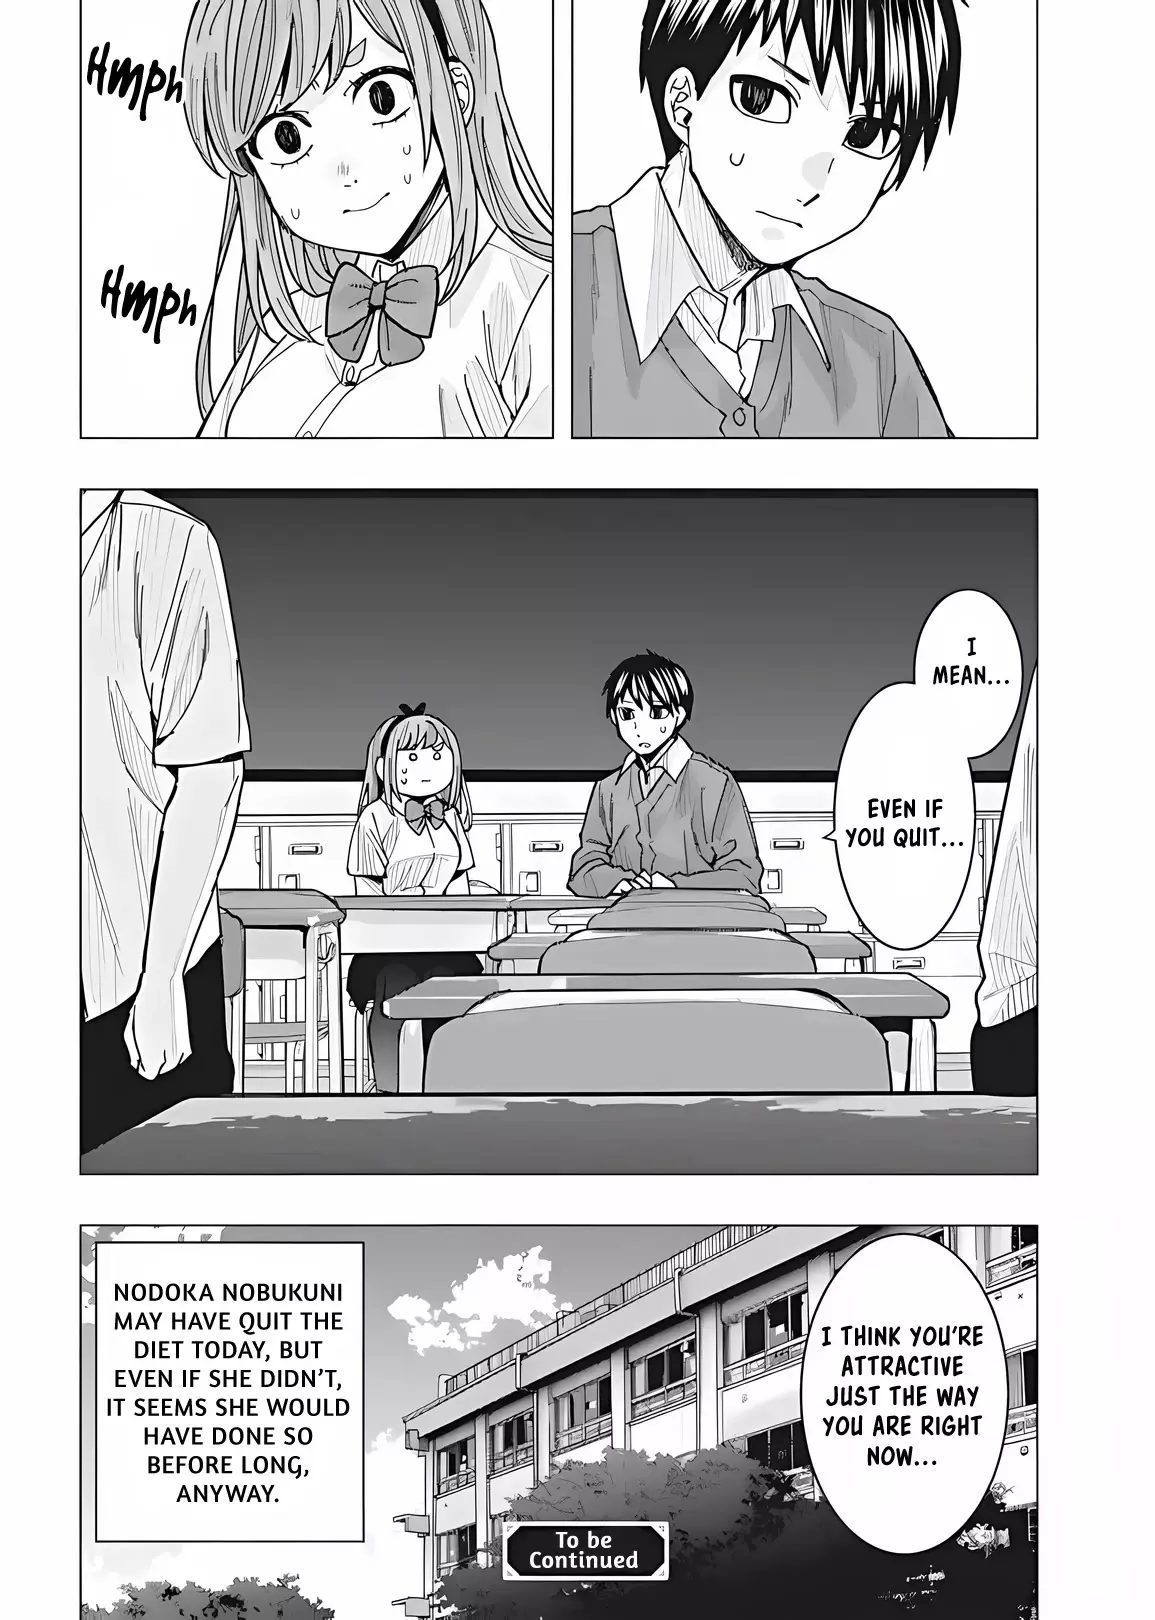 "nobukuni-San" Does She Like Me? - 23 page 16-592bd261